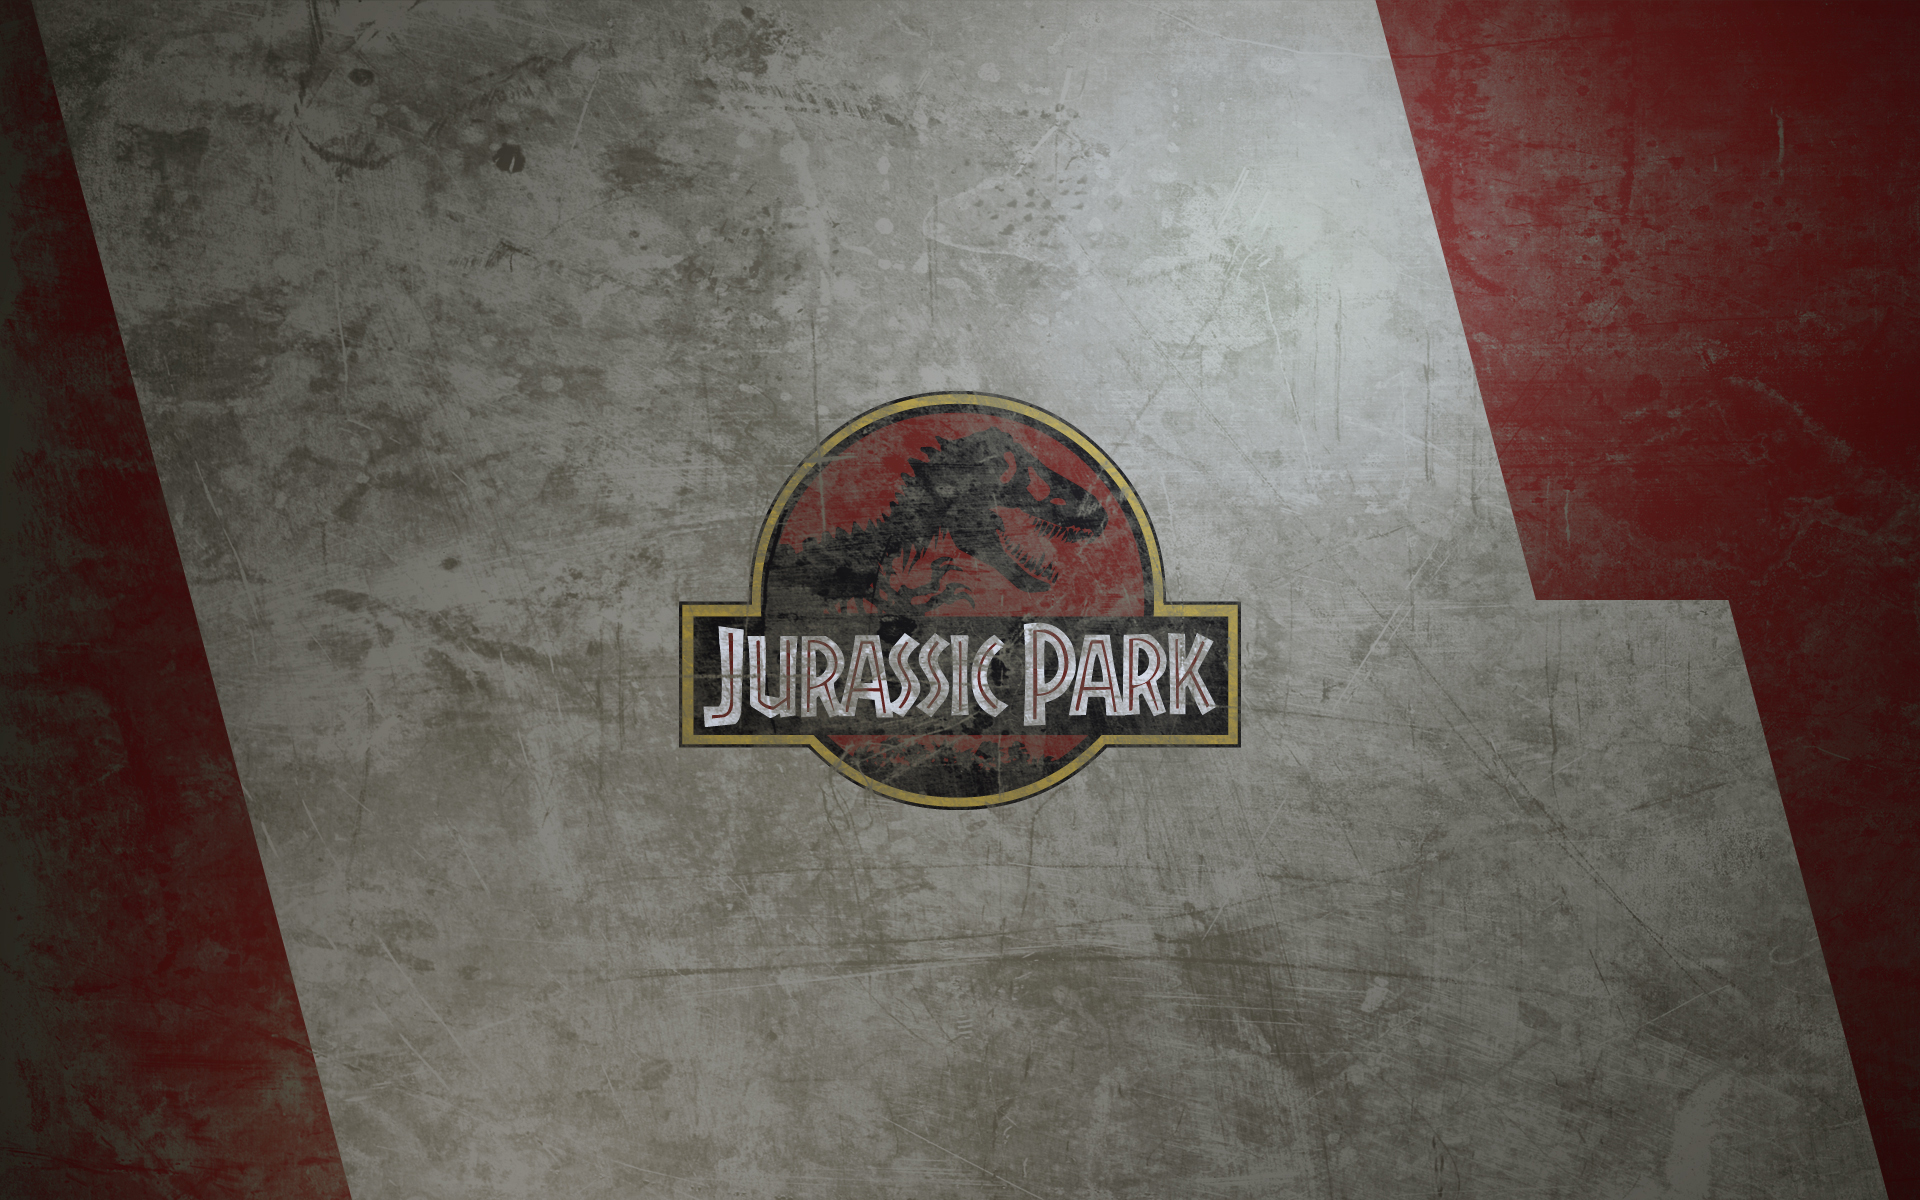 Jurassic Park Wallpaper HD - PixelsTalk.Net